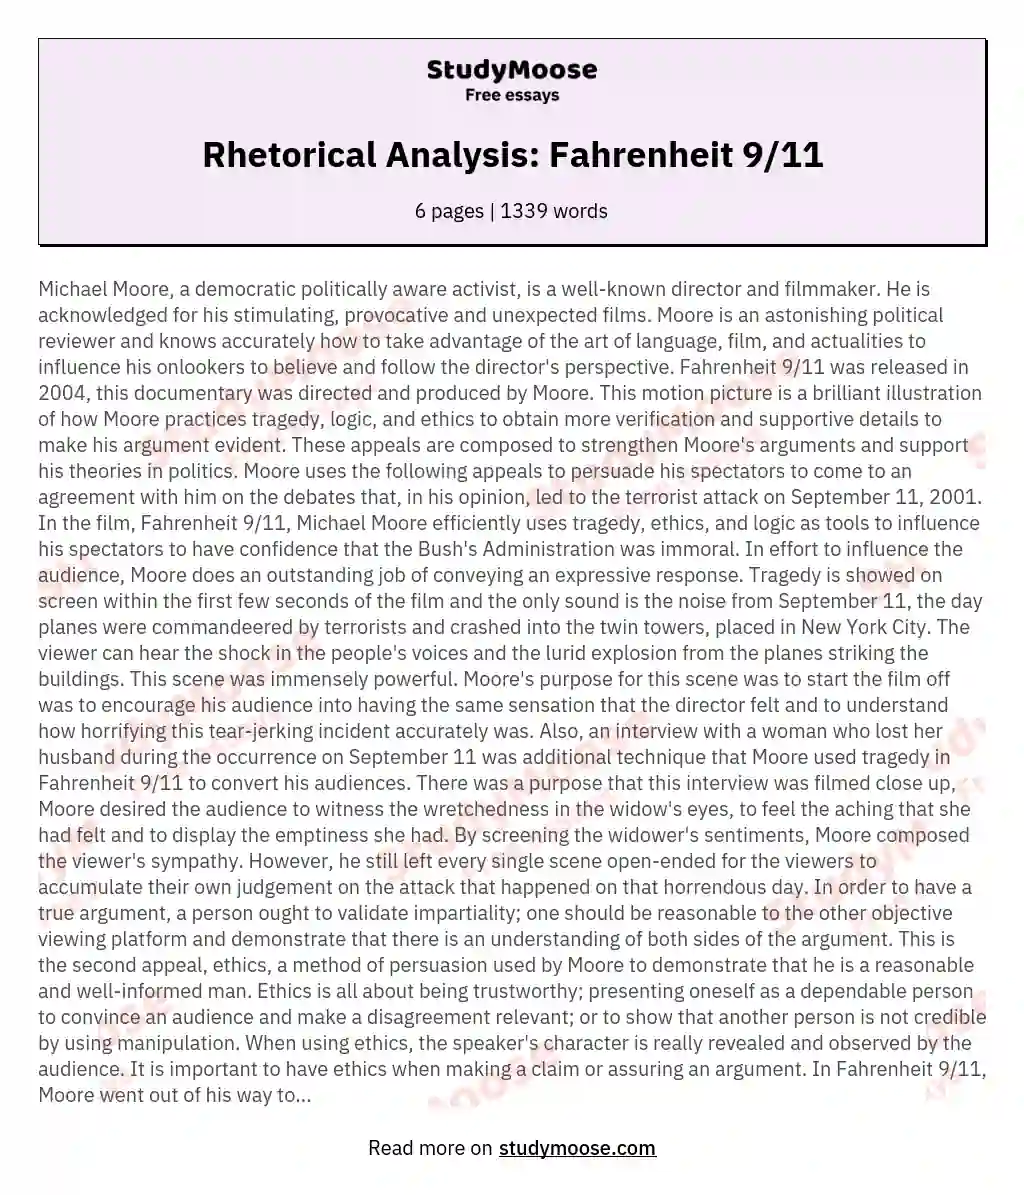 Rhetorical Analysis: Fahrenheit 9/11 essay